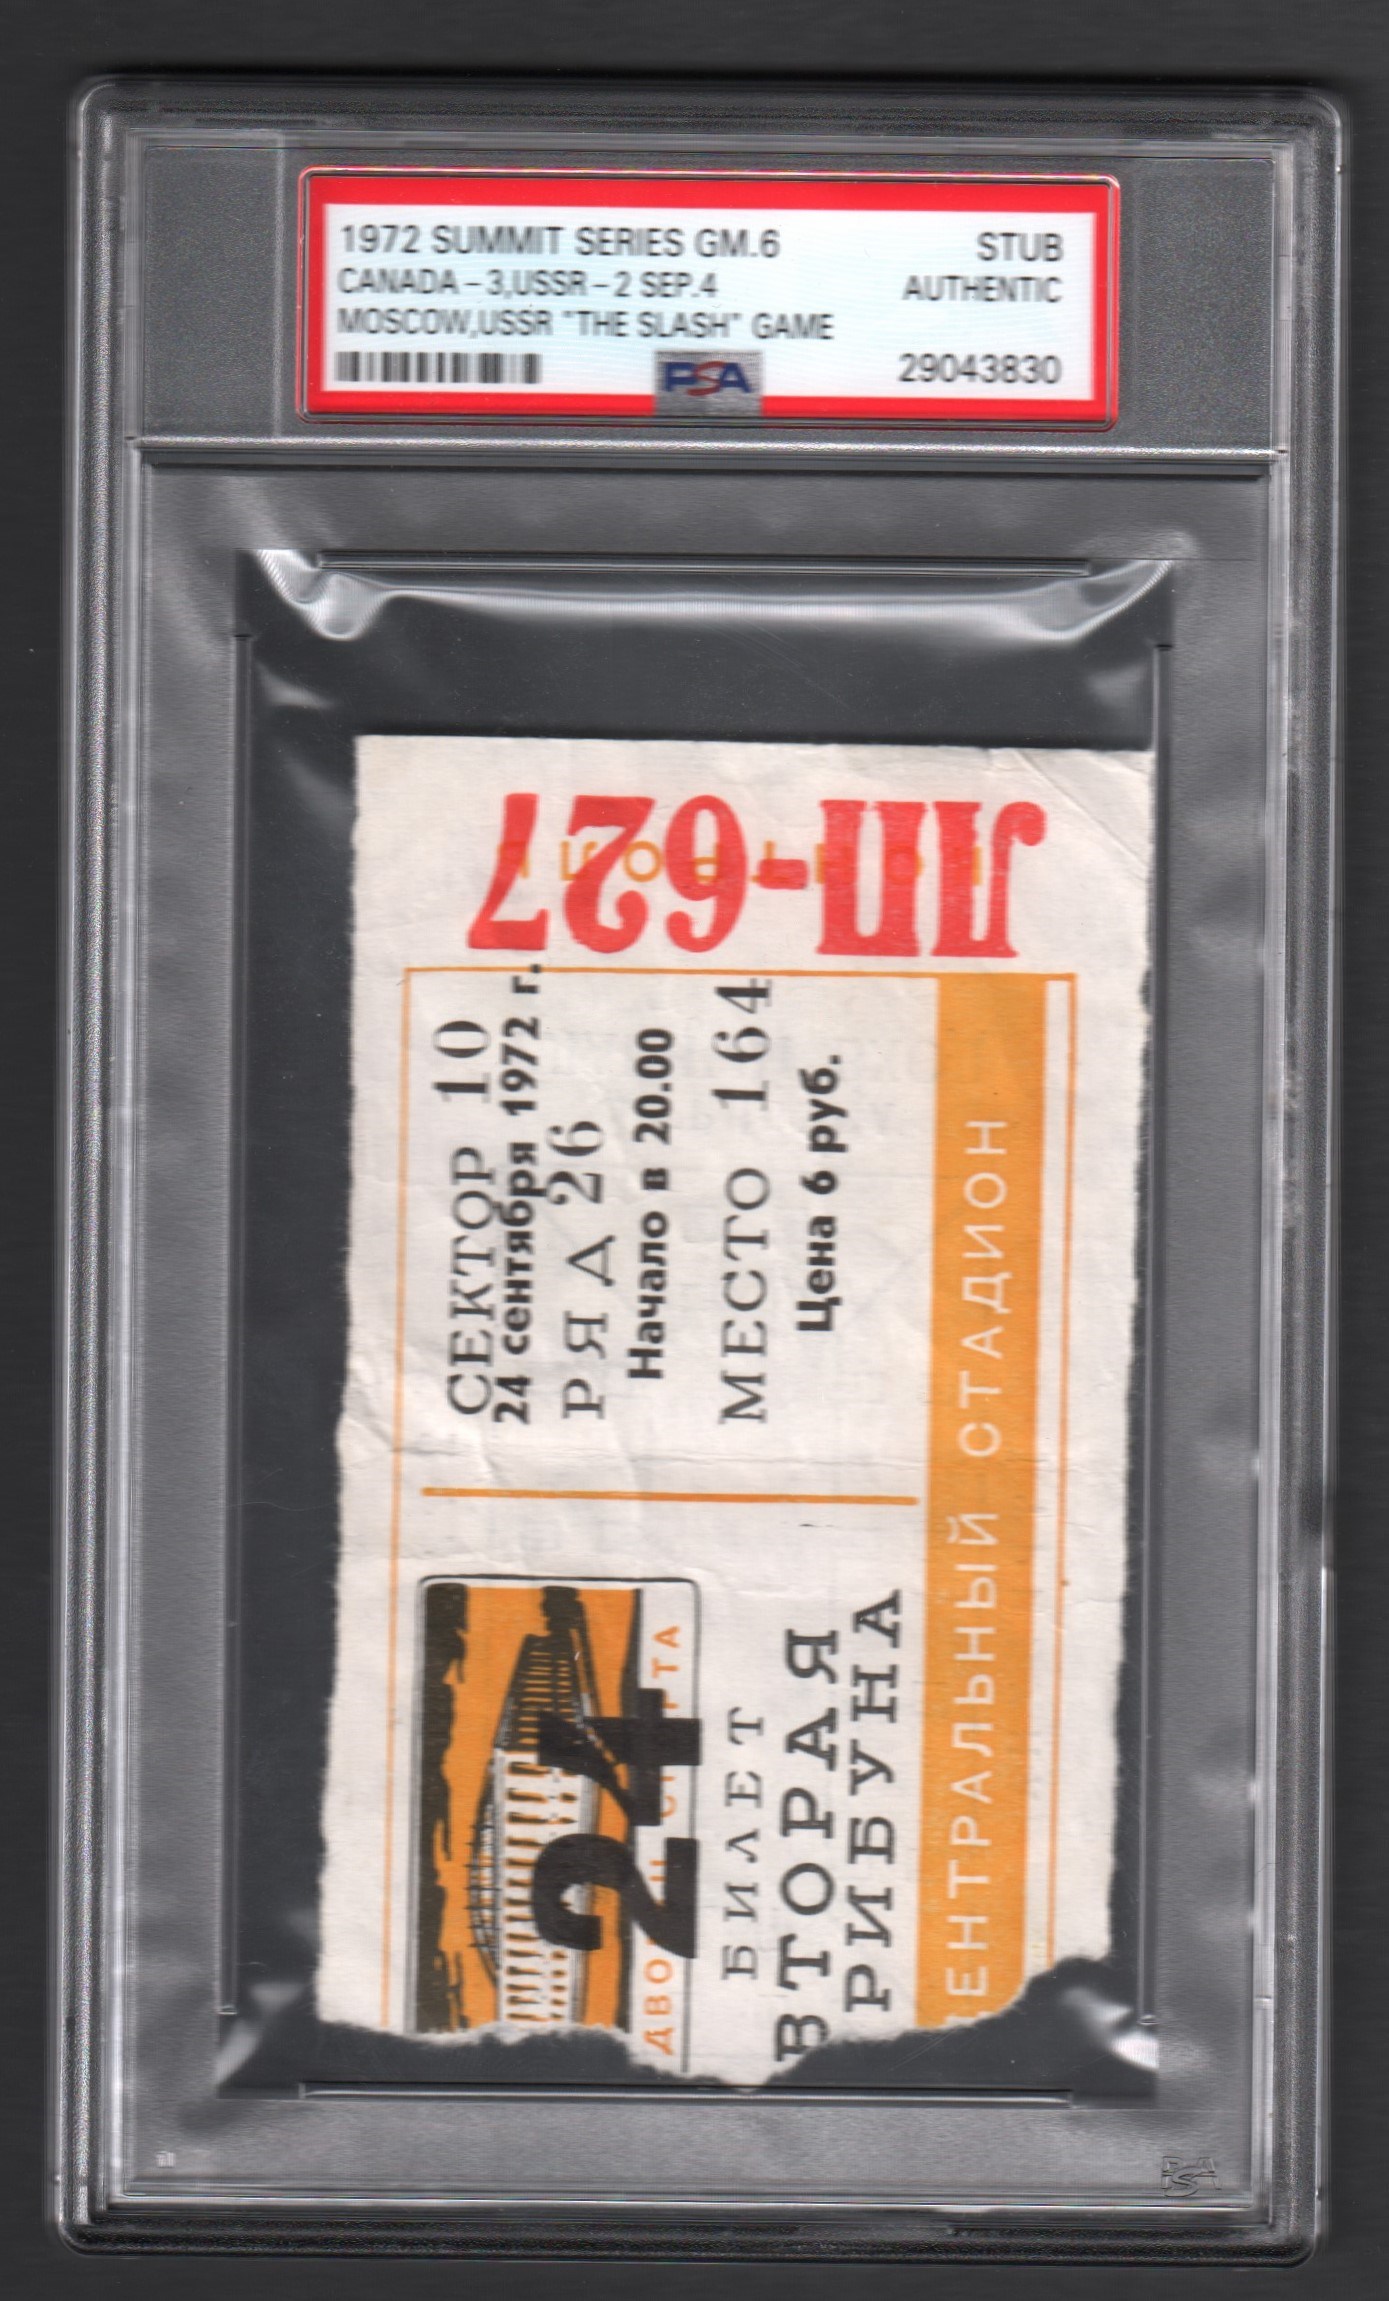 Hockey - Jean Ratelle's 1972 Summit Series Tickets w/ "The Slash" Game